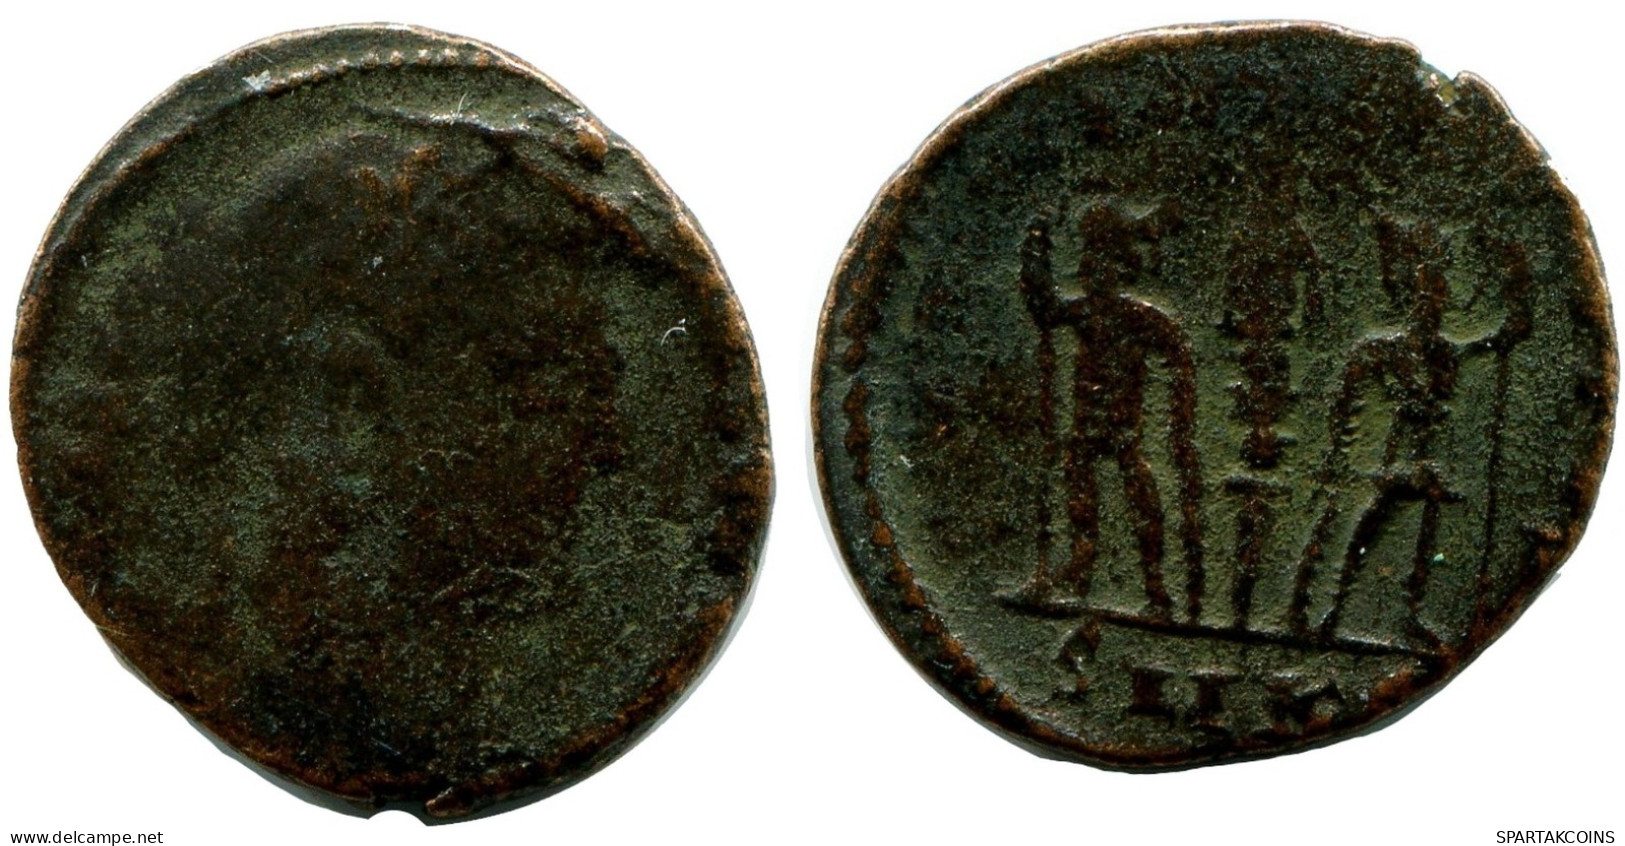 ROMAN Pièce MINTED IN CYZICUS FOUND IN IHNASYAH HOARD EGYPT #ANC11049.14.F.A - L'Empire Chrétien (307 à 363)